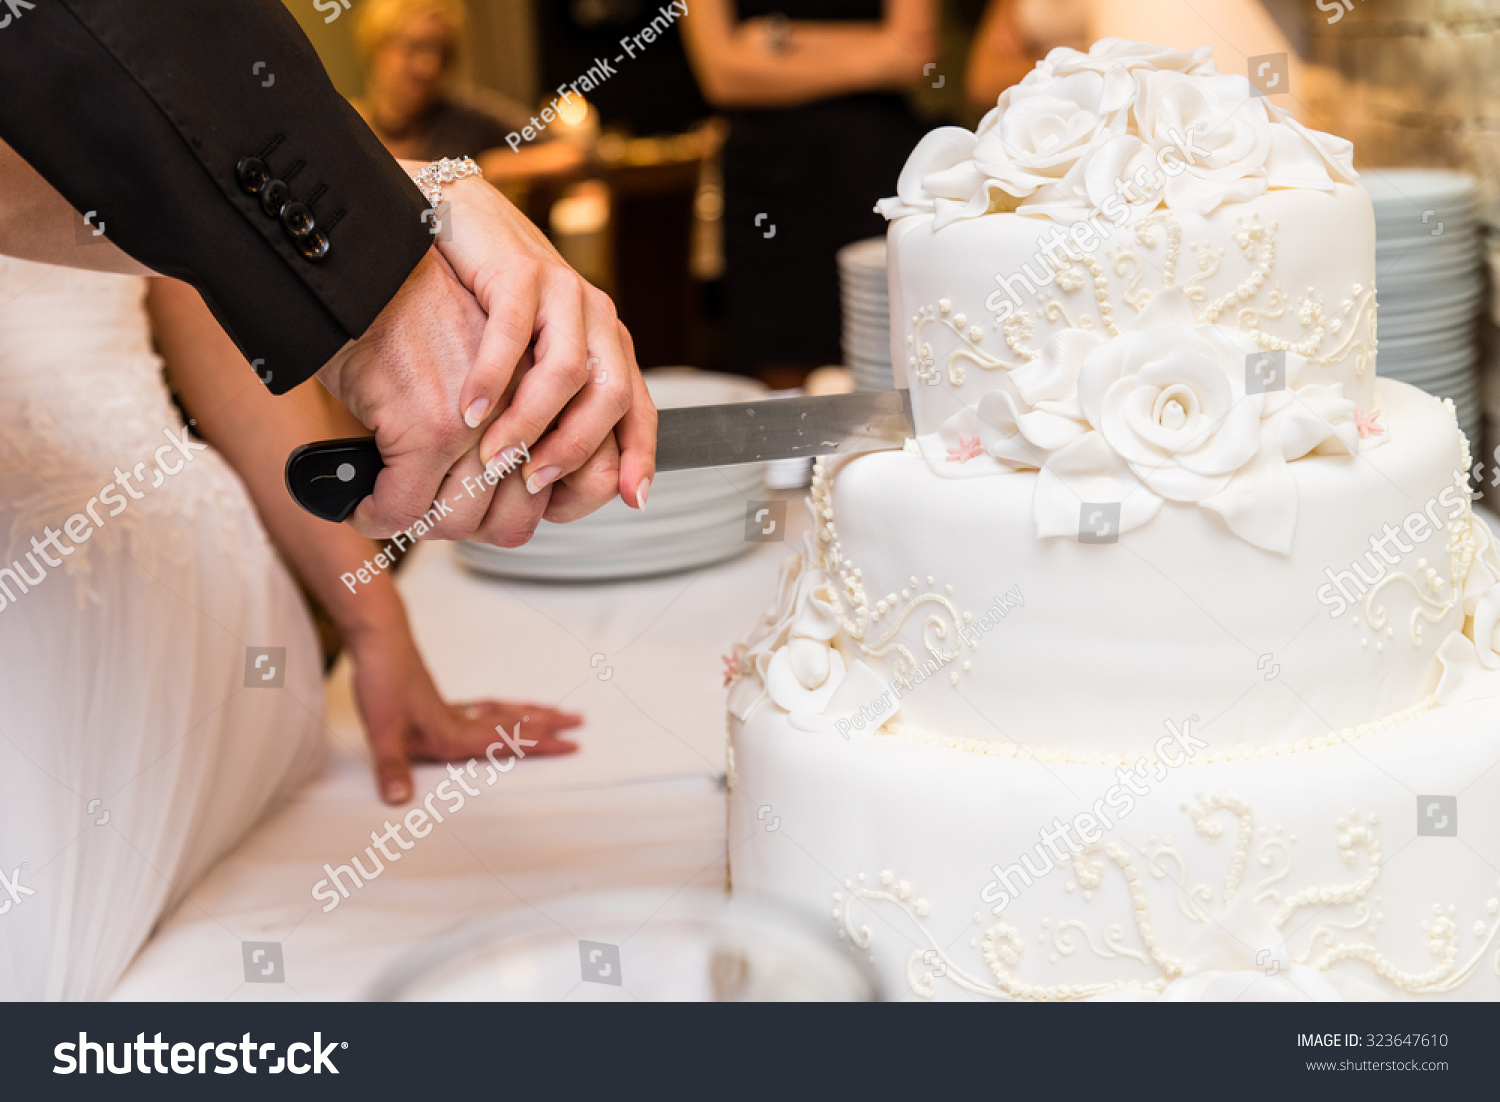 Bride Groom Wedding  Reception  Cutting  Wedding  Stock Photo 